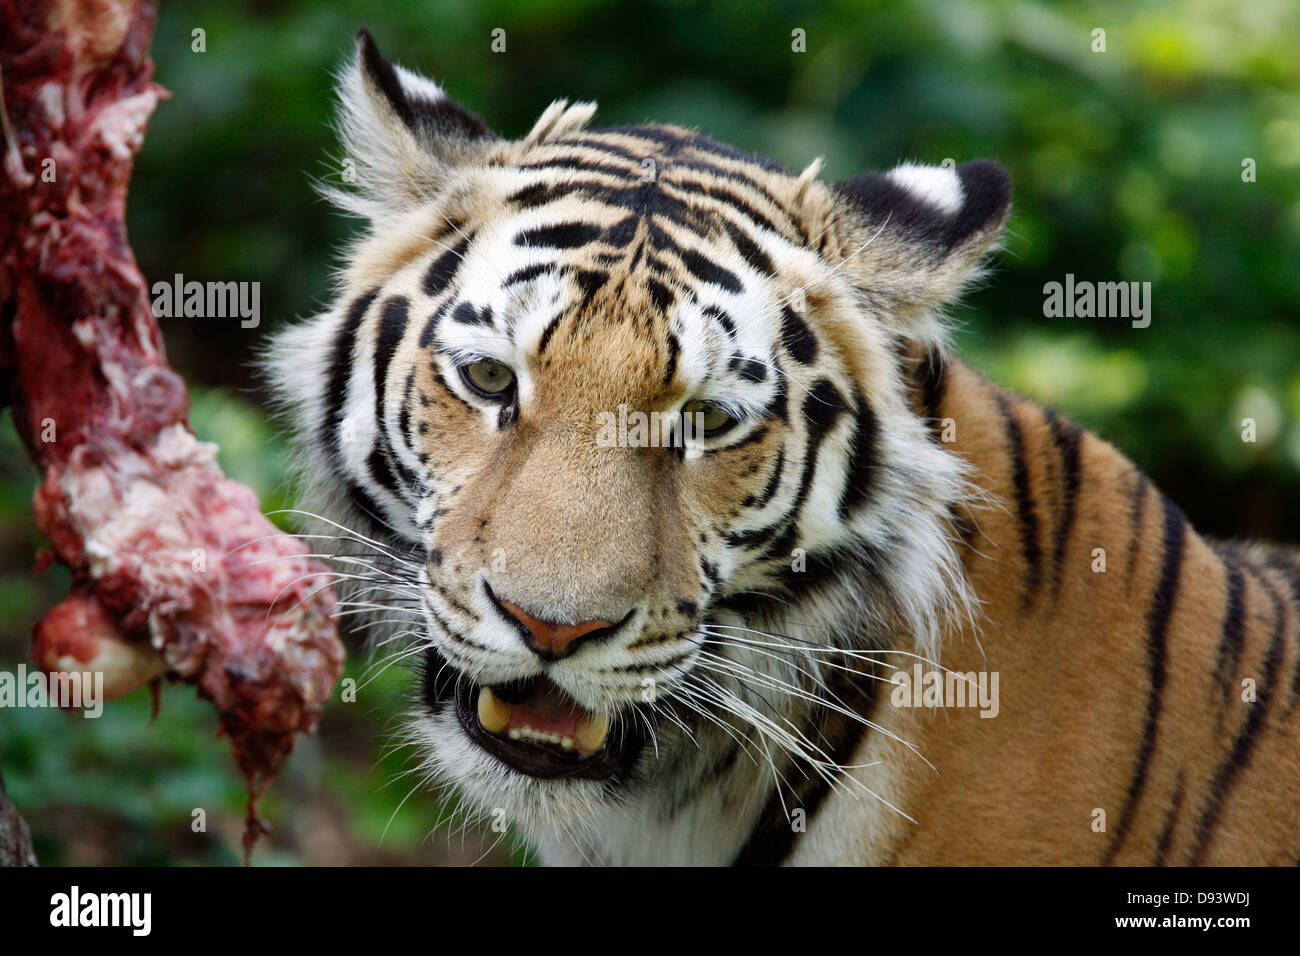 Close-up of tiger eating prey Stock Photo